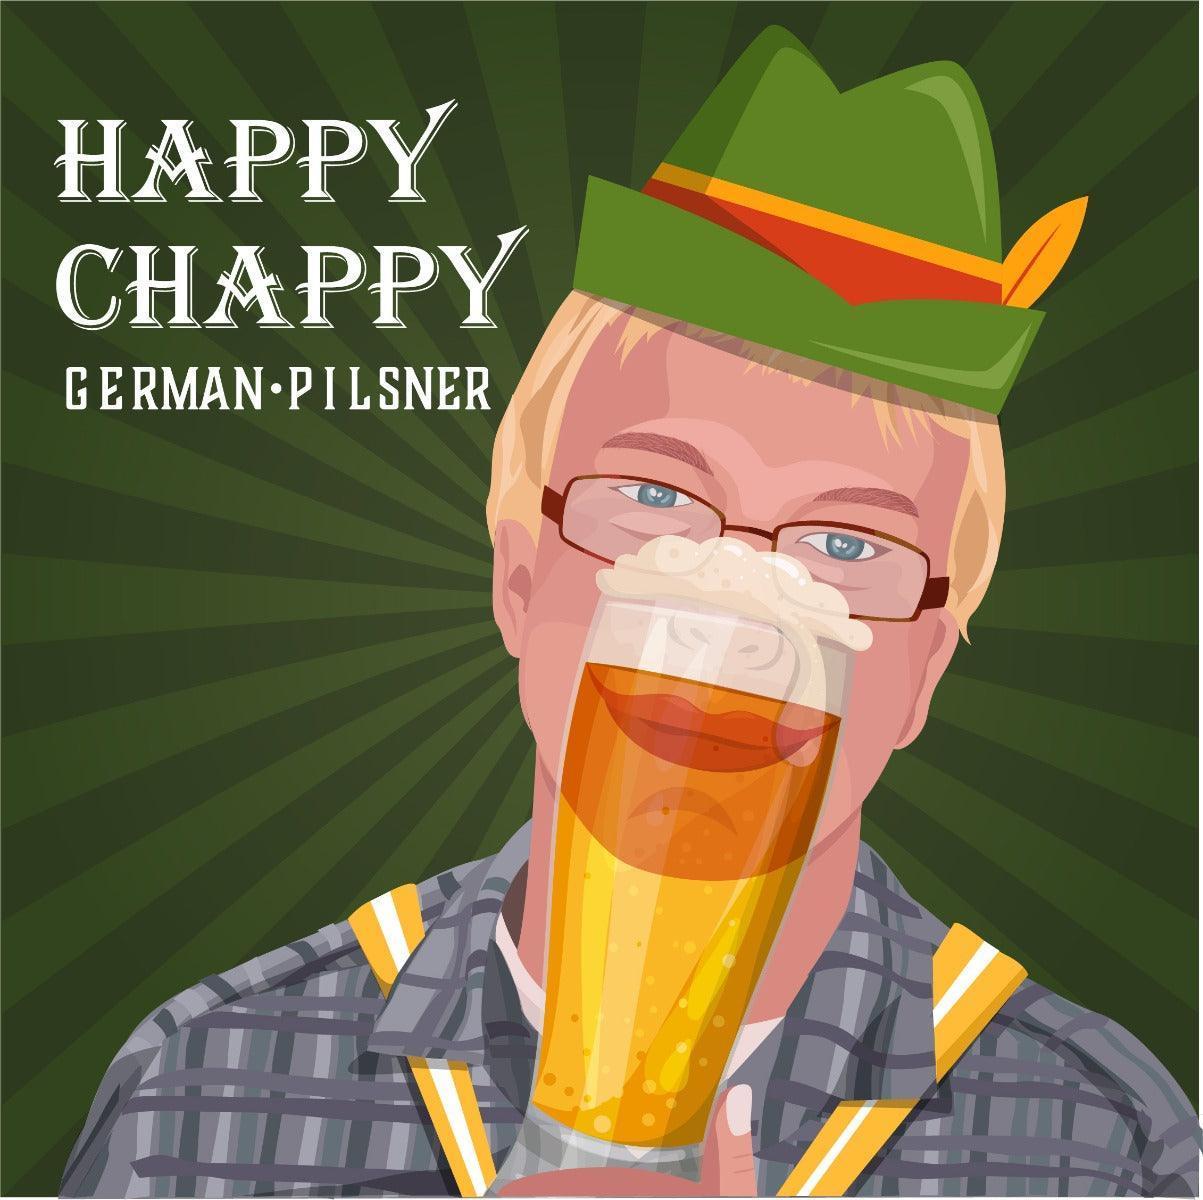 Golden Givers All Grain Recipe Kit - German Pilsner - Happy Chappy - KegLand